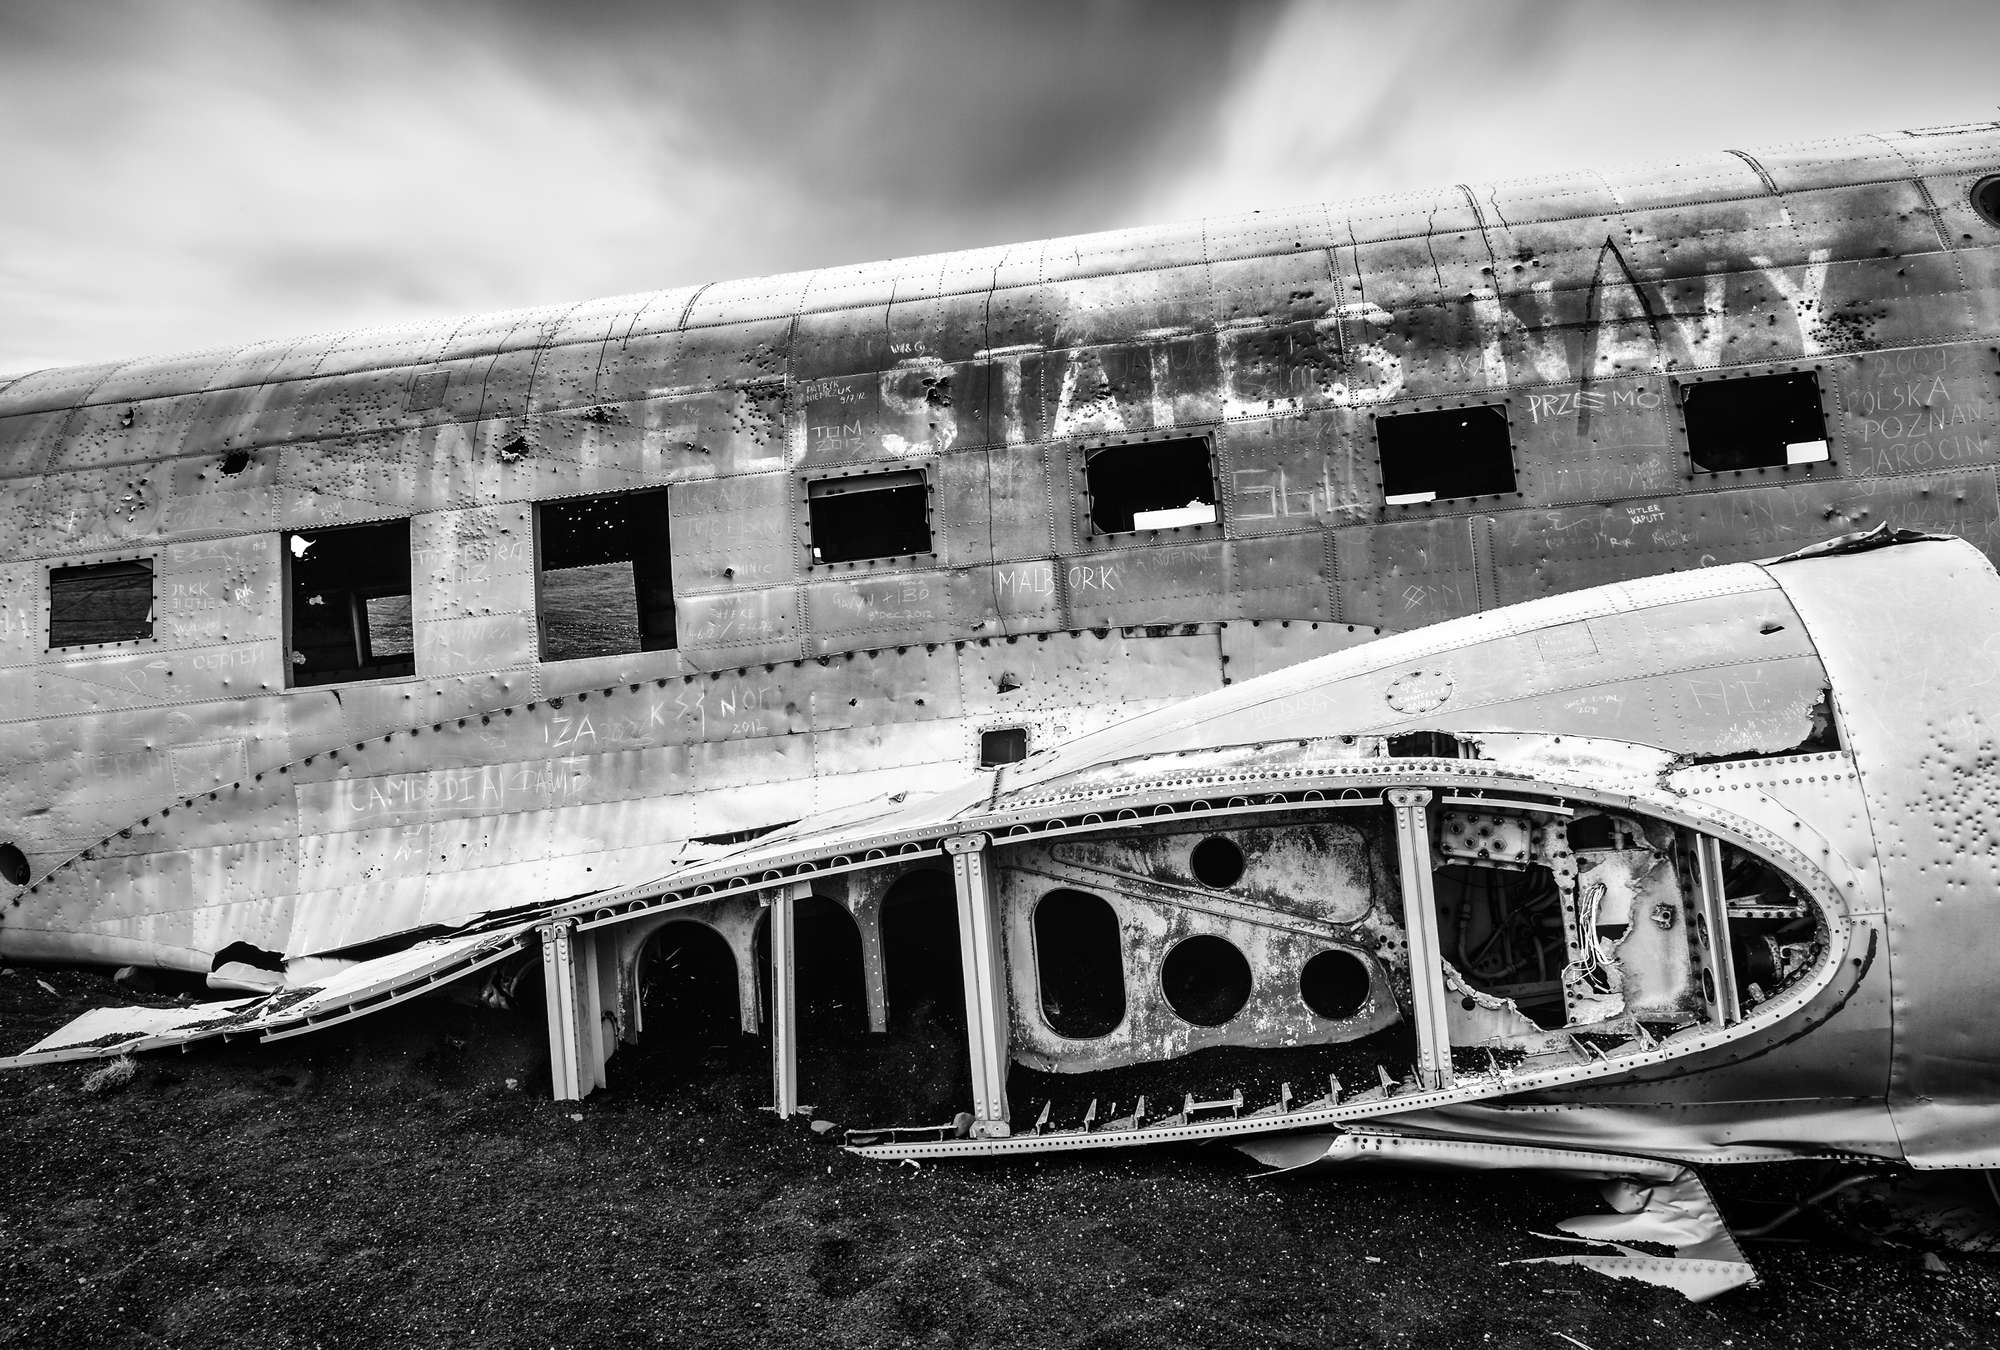             Photo wallpaper plane wreck Plainted States Navy - black and white
        